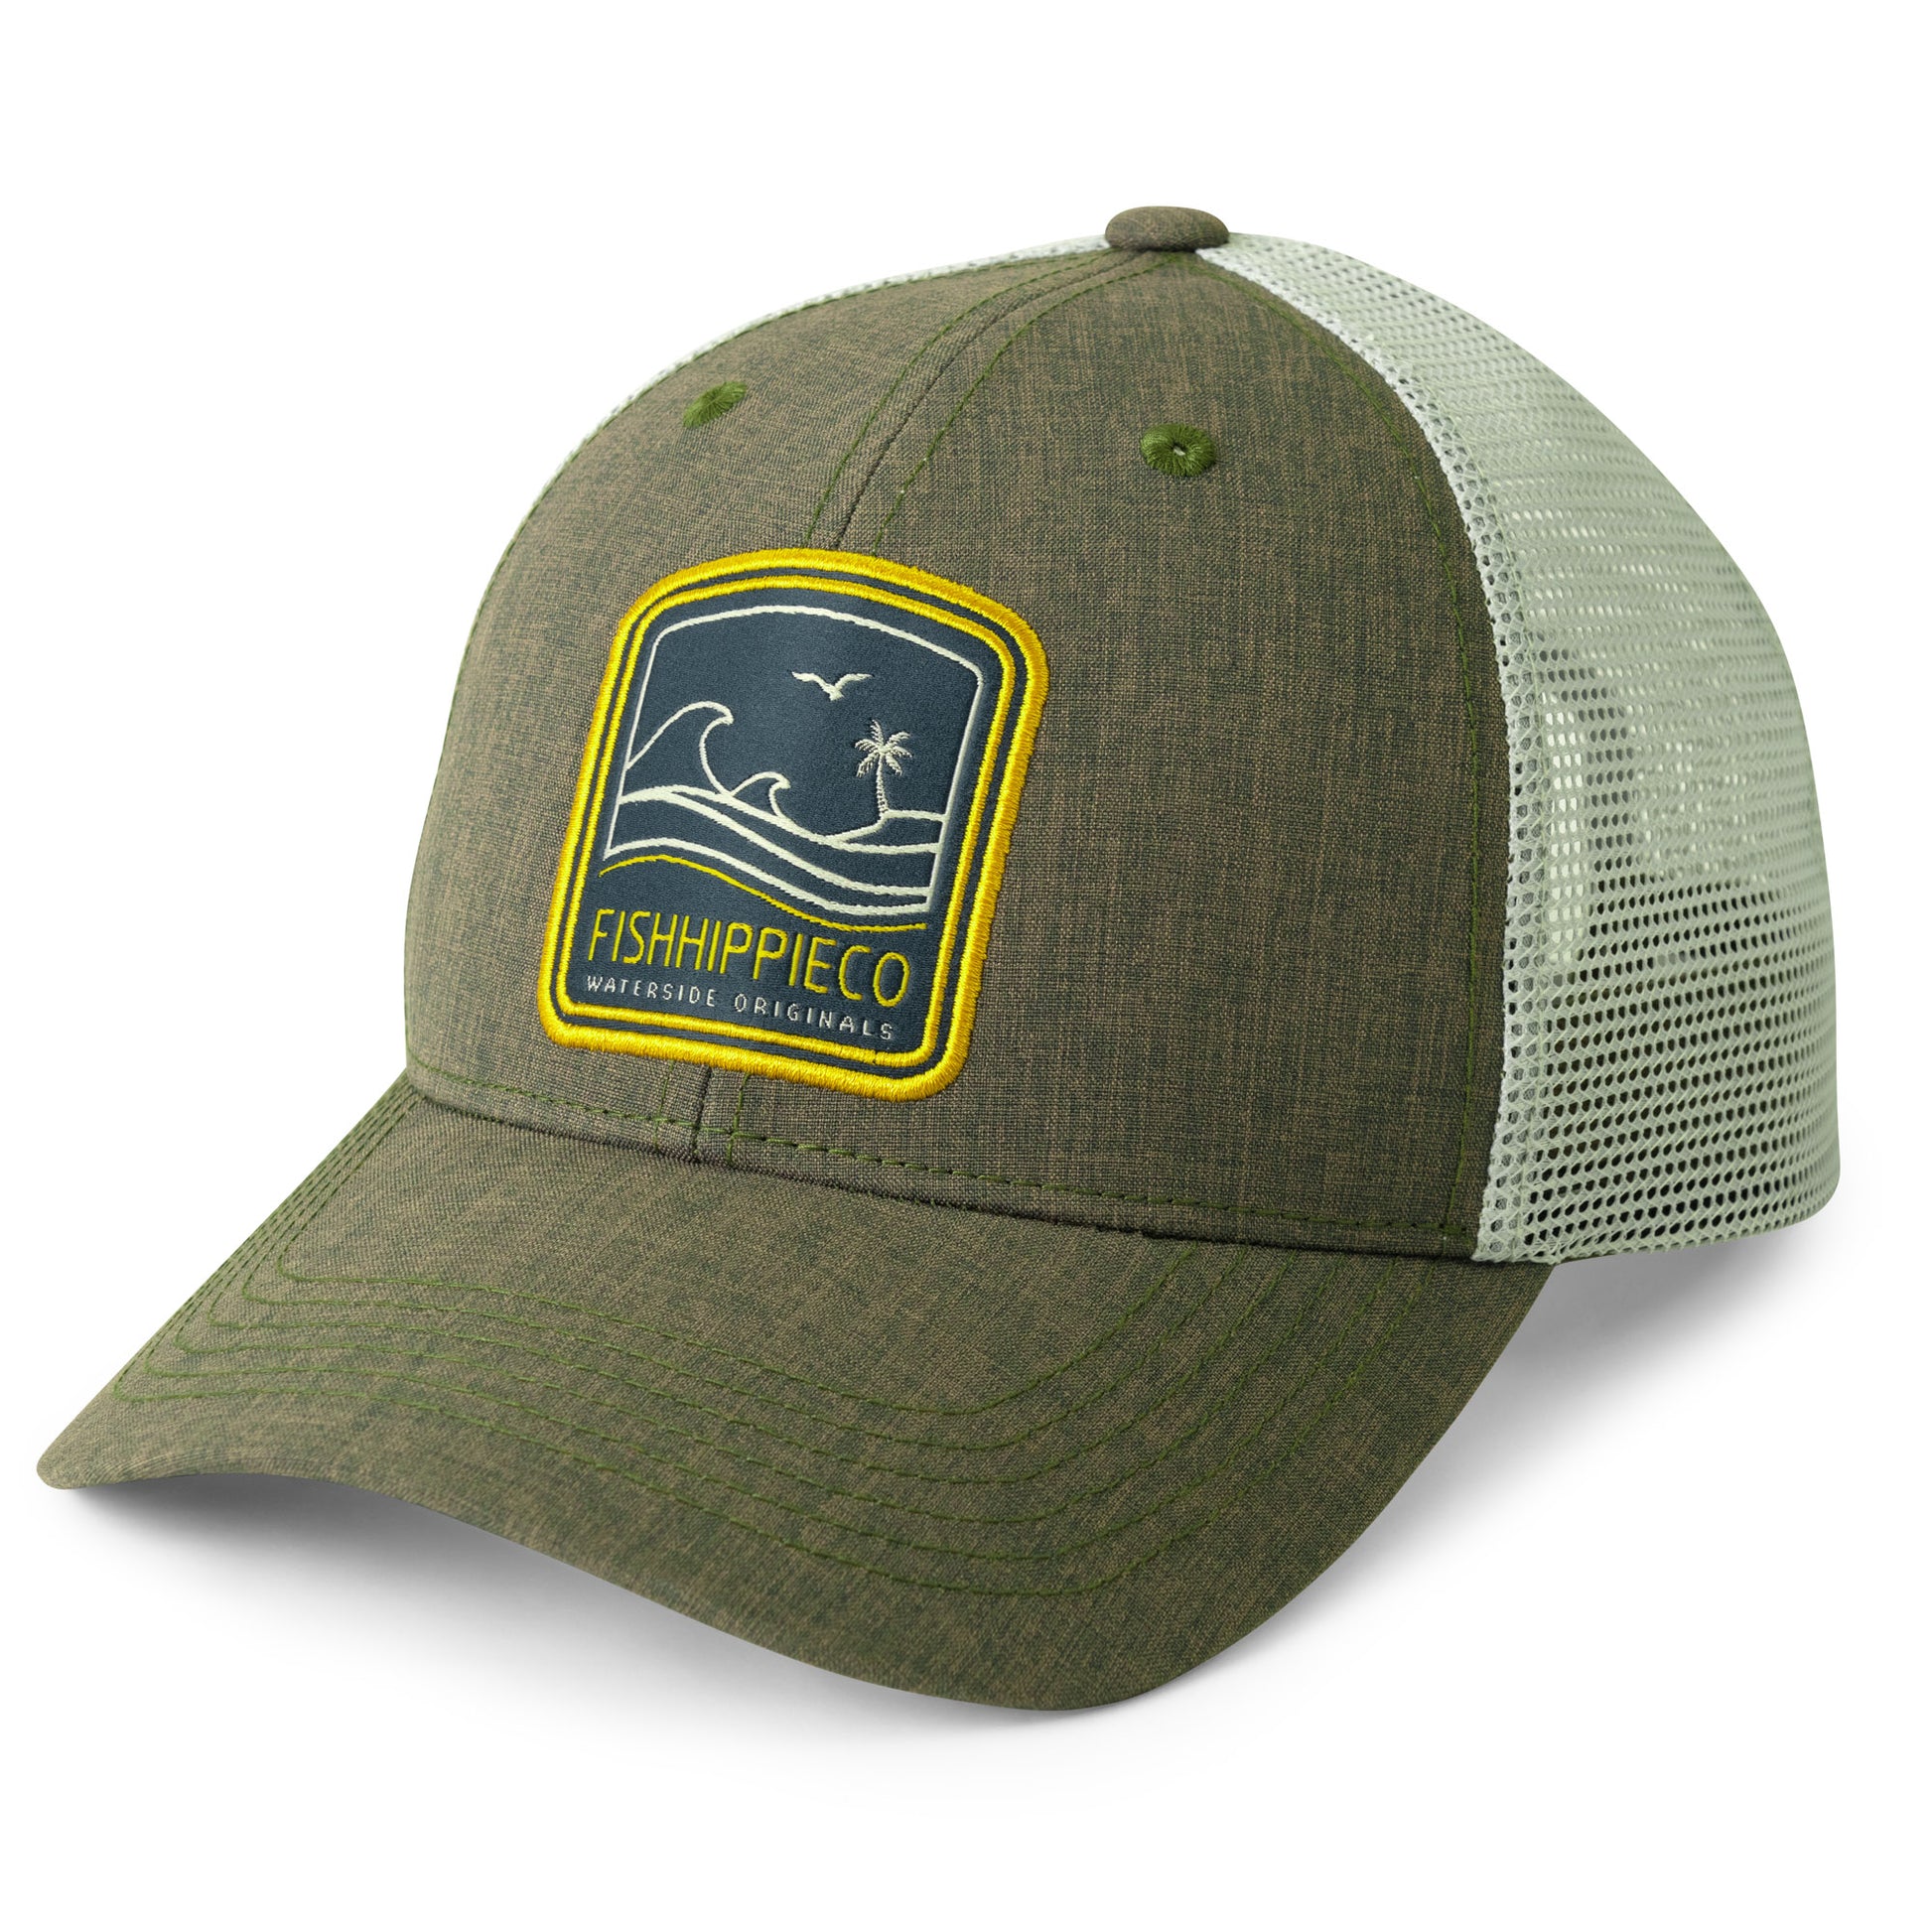 Sage Mesh Back Hat Trucker Cap, blue, Fly Fishing